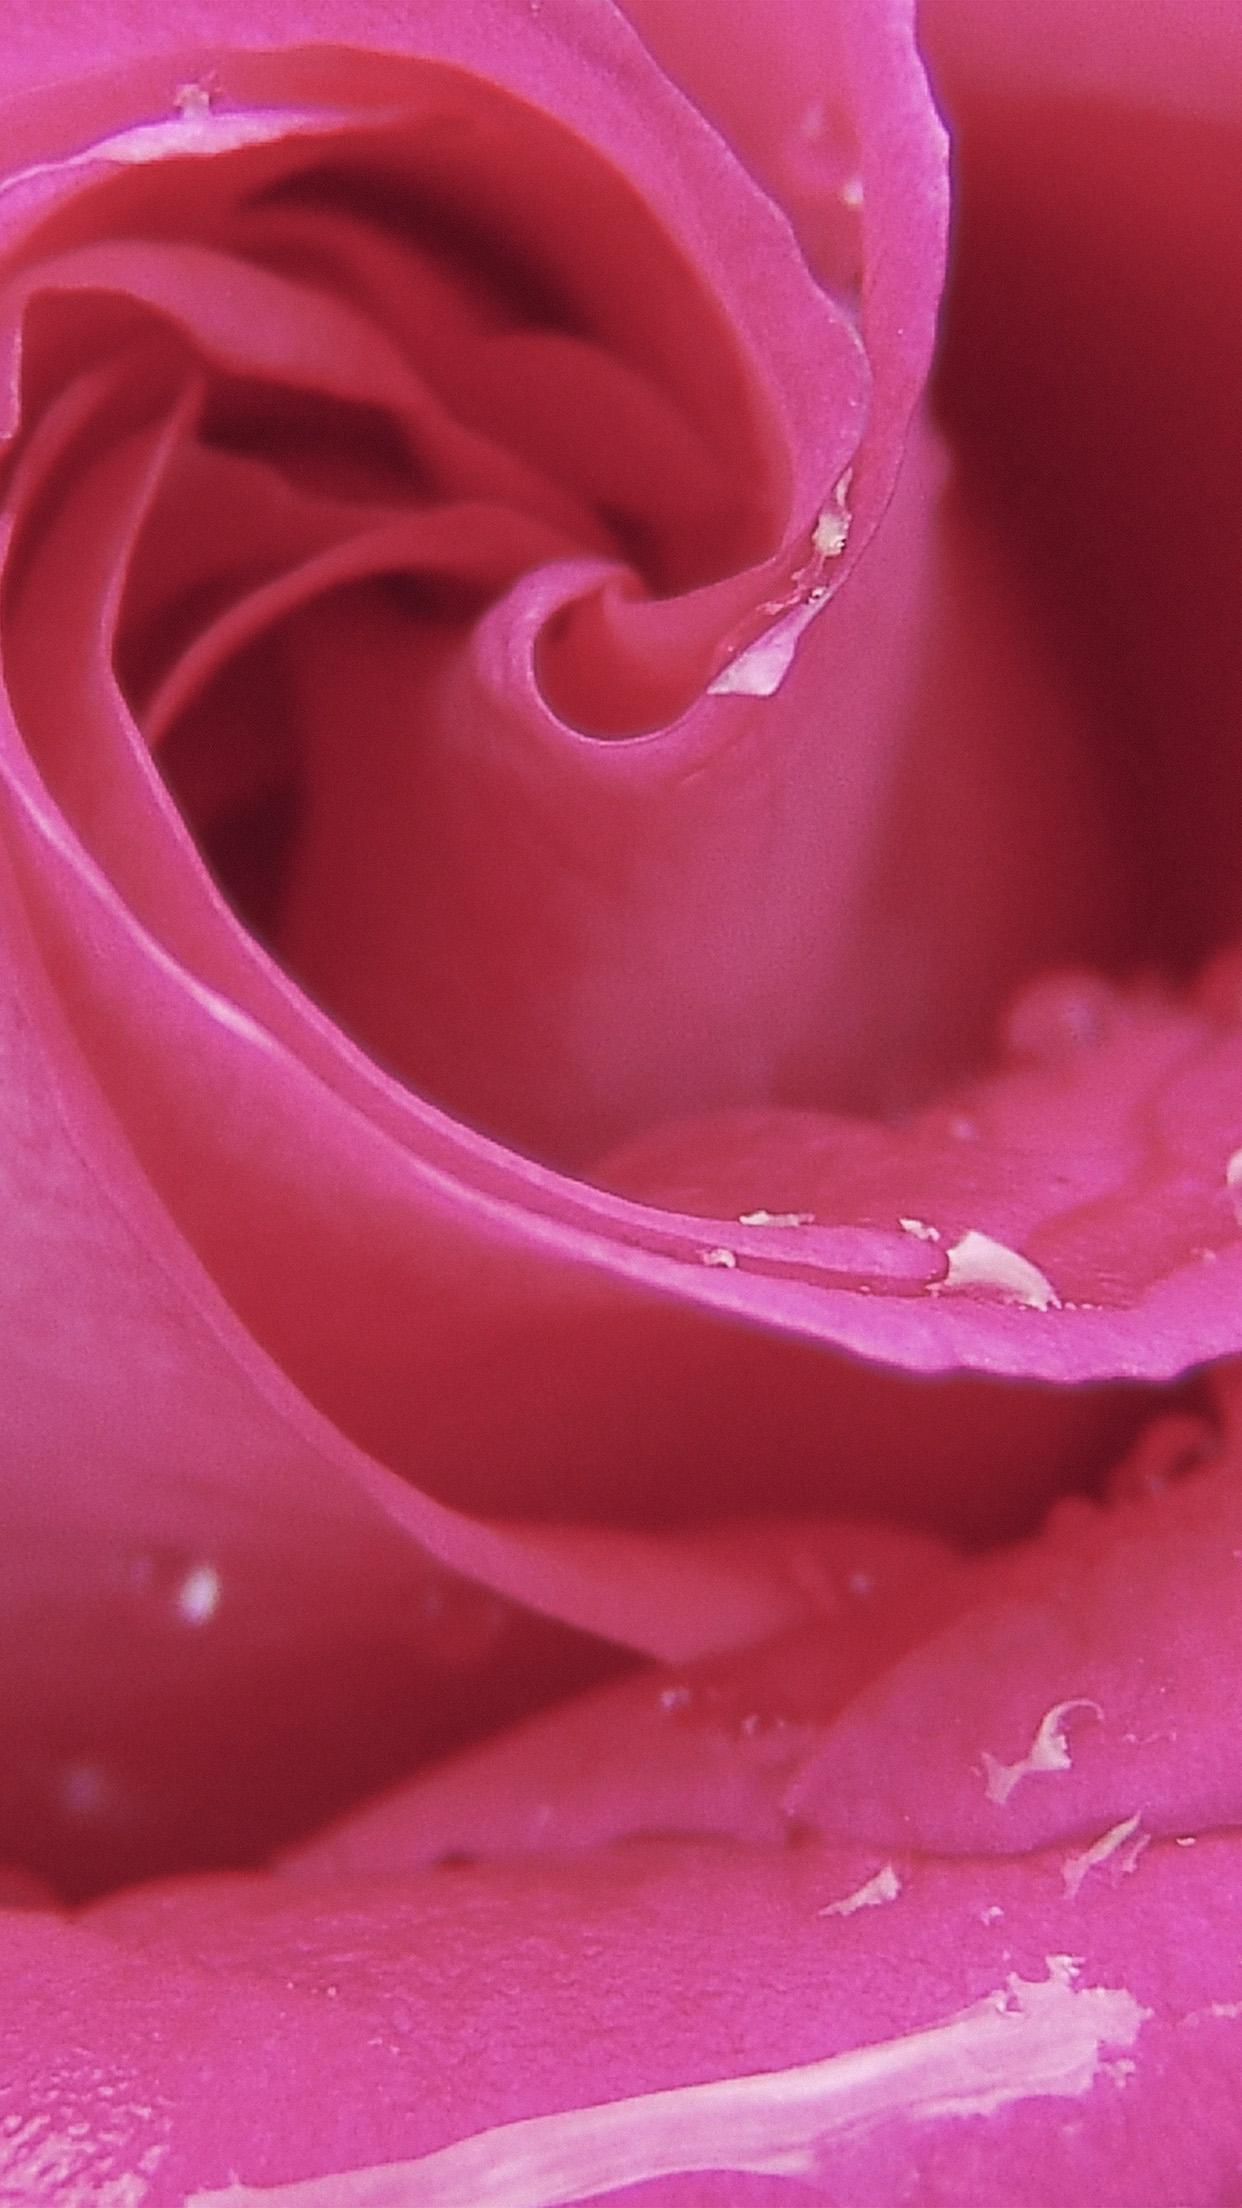 iPhone7 wallpaper. love romantic rose pink red